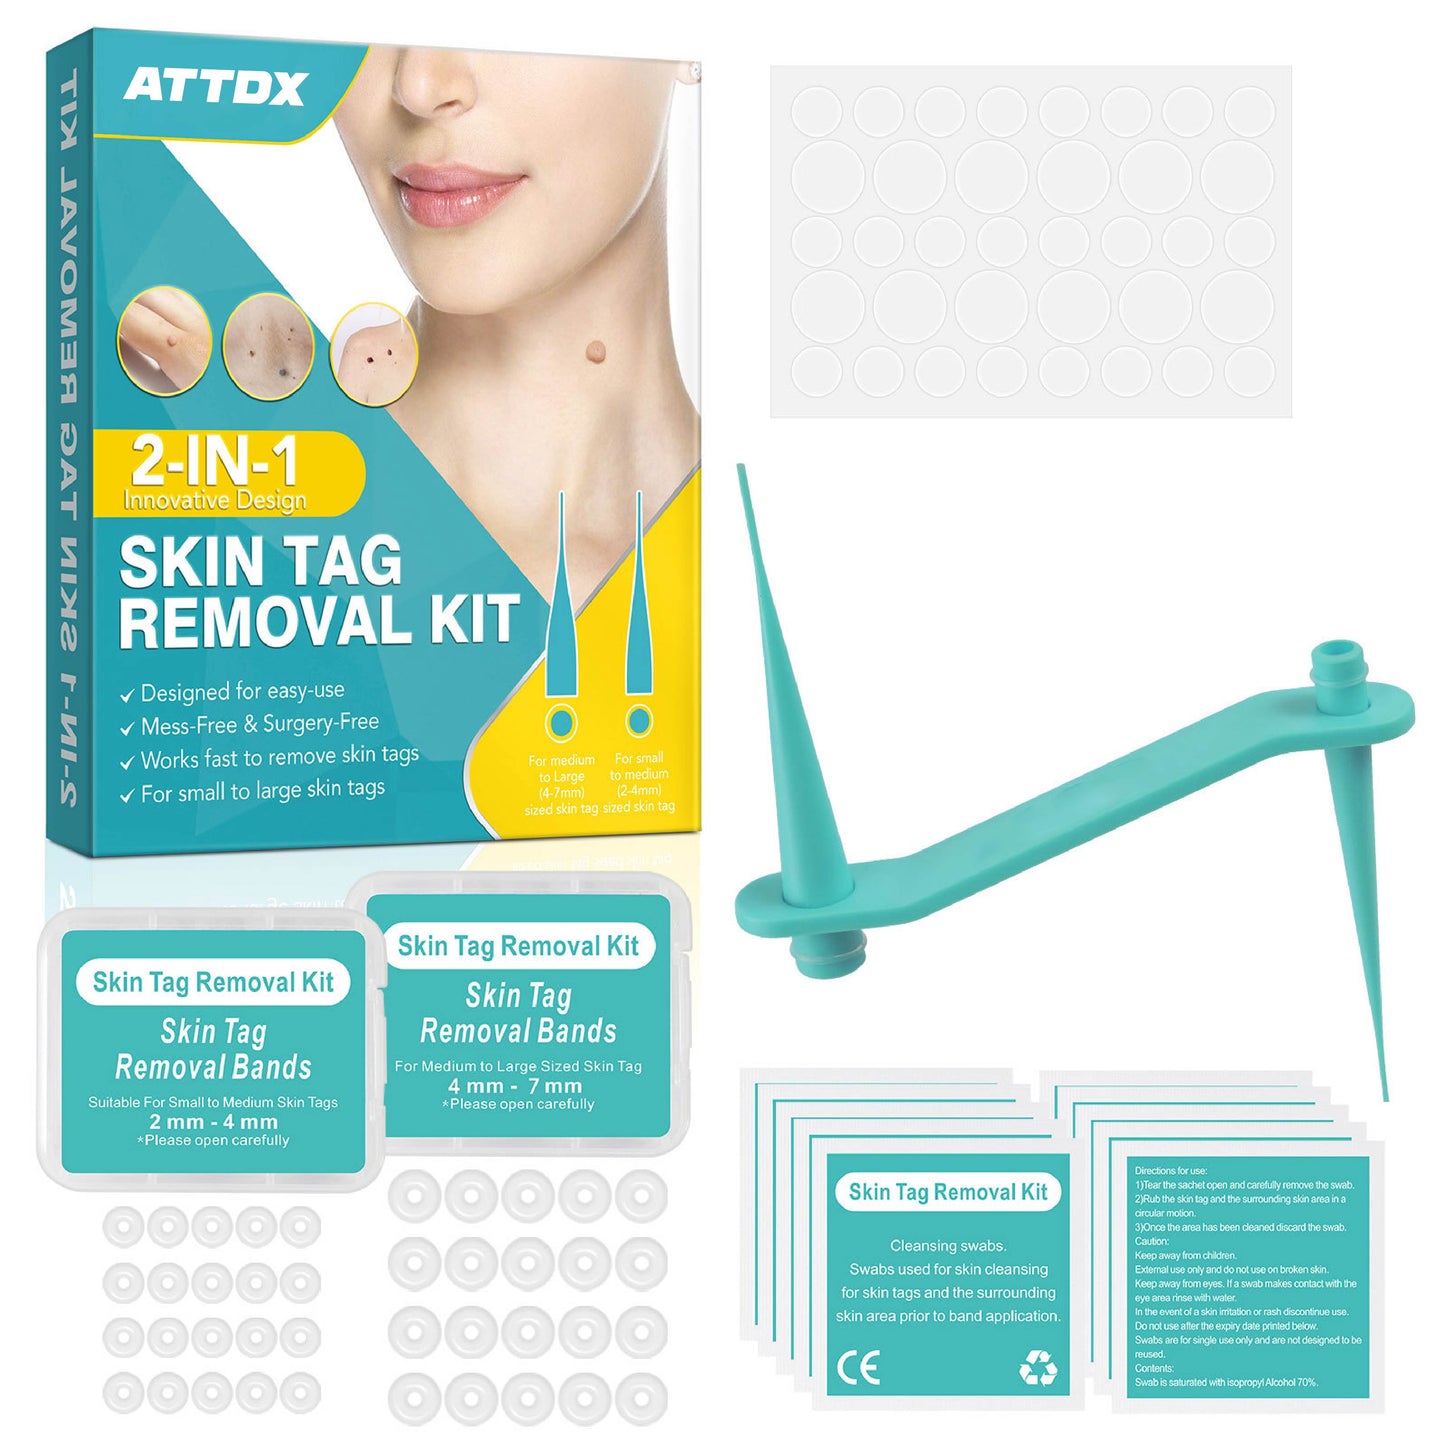 ATTDX AutoRemove SkinTag Kit